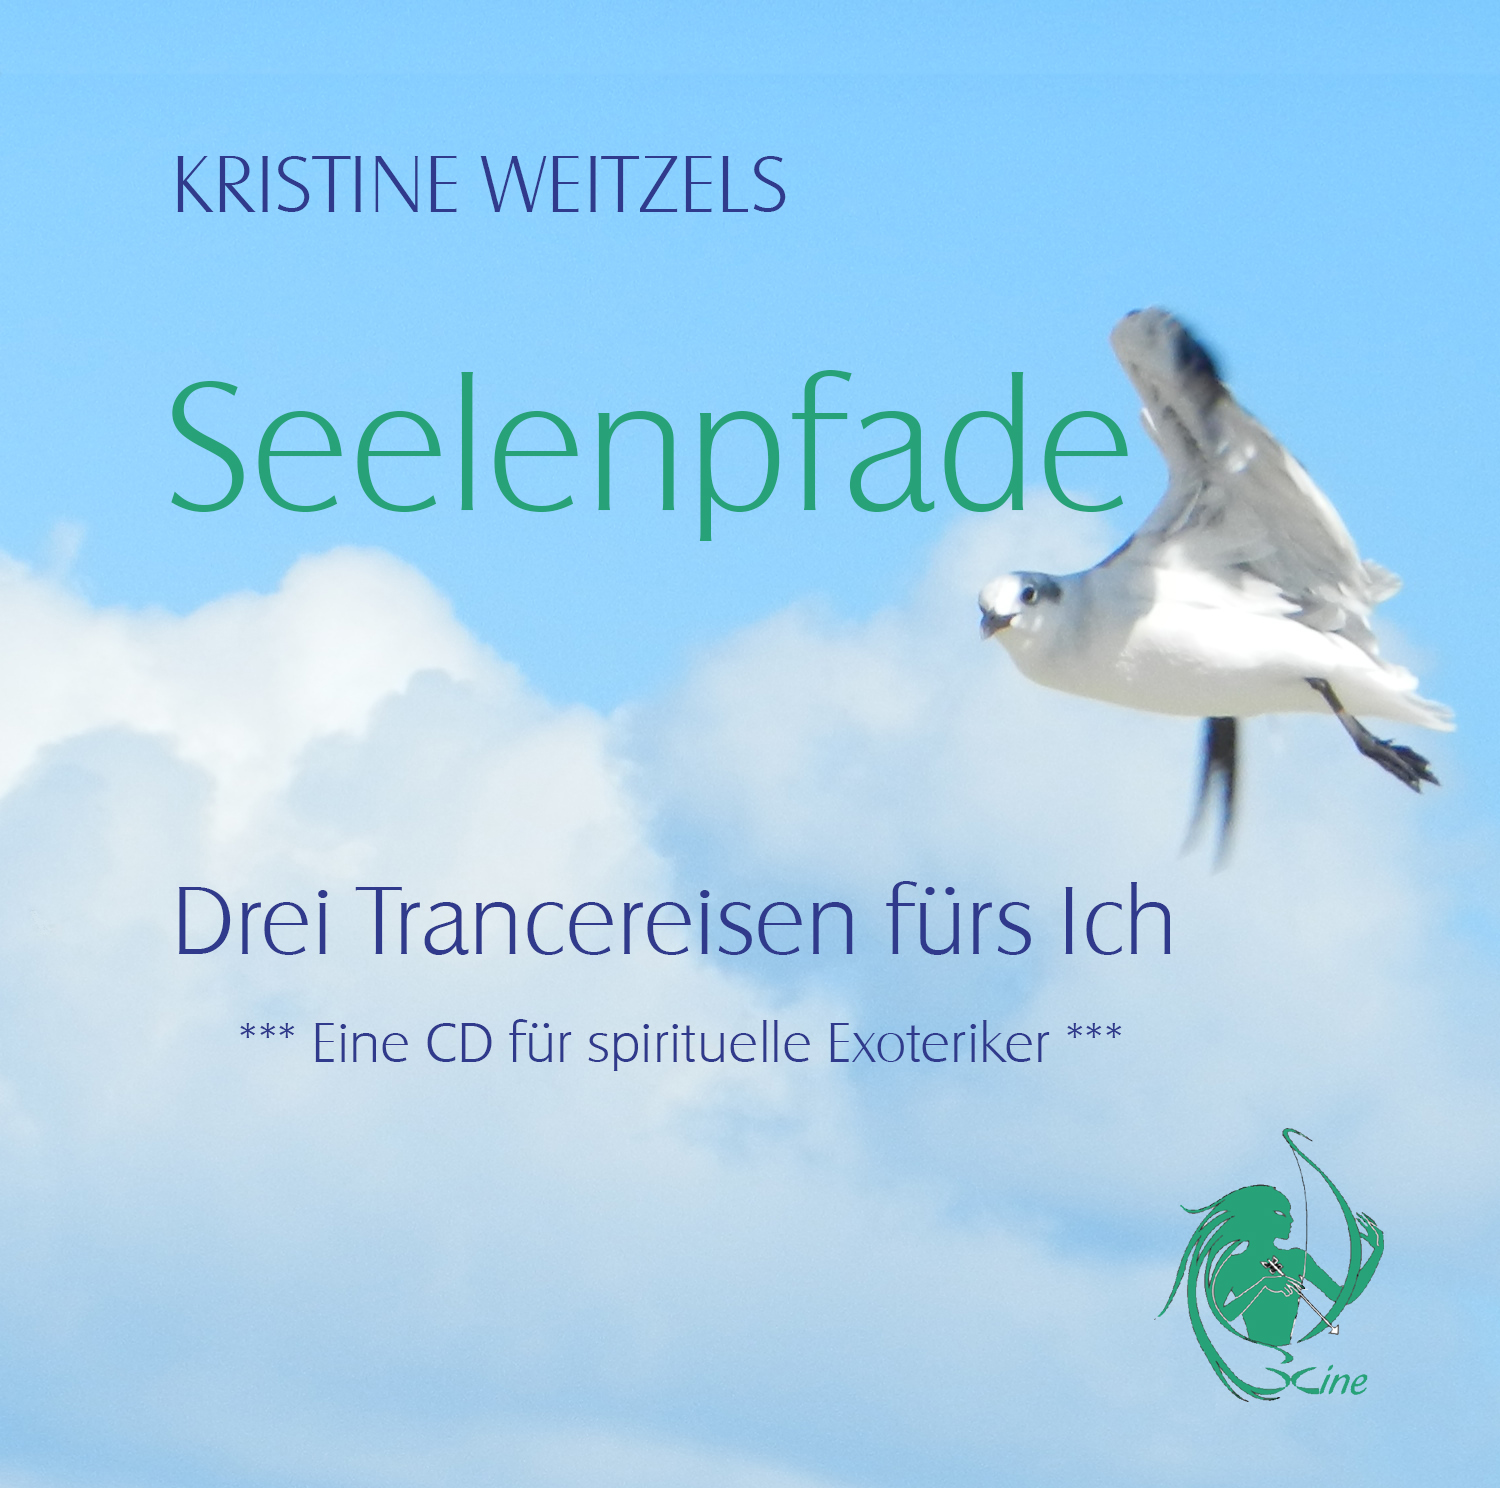 Seelenpfade-CD Cover Card